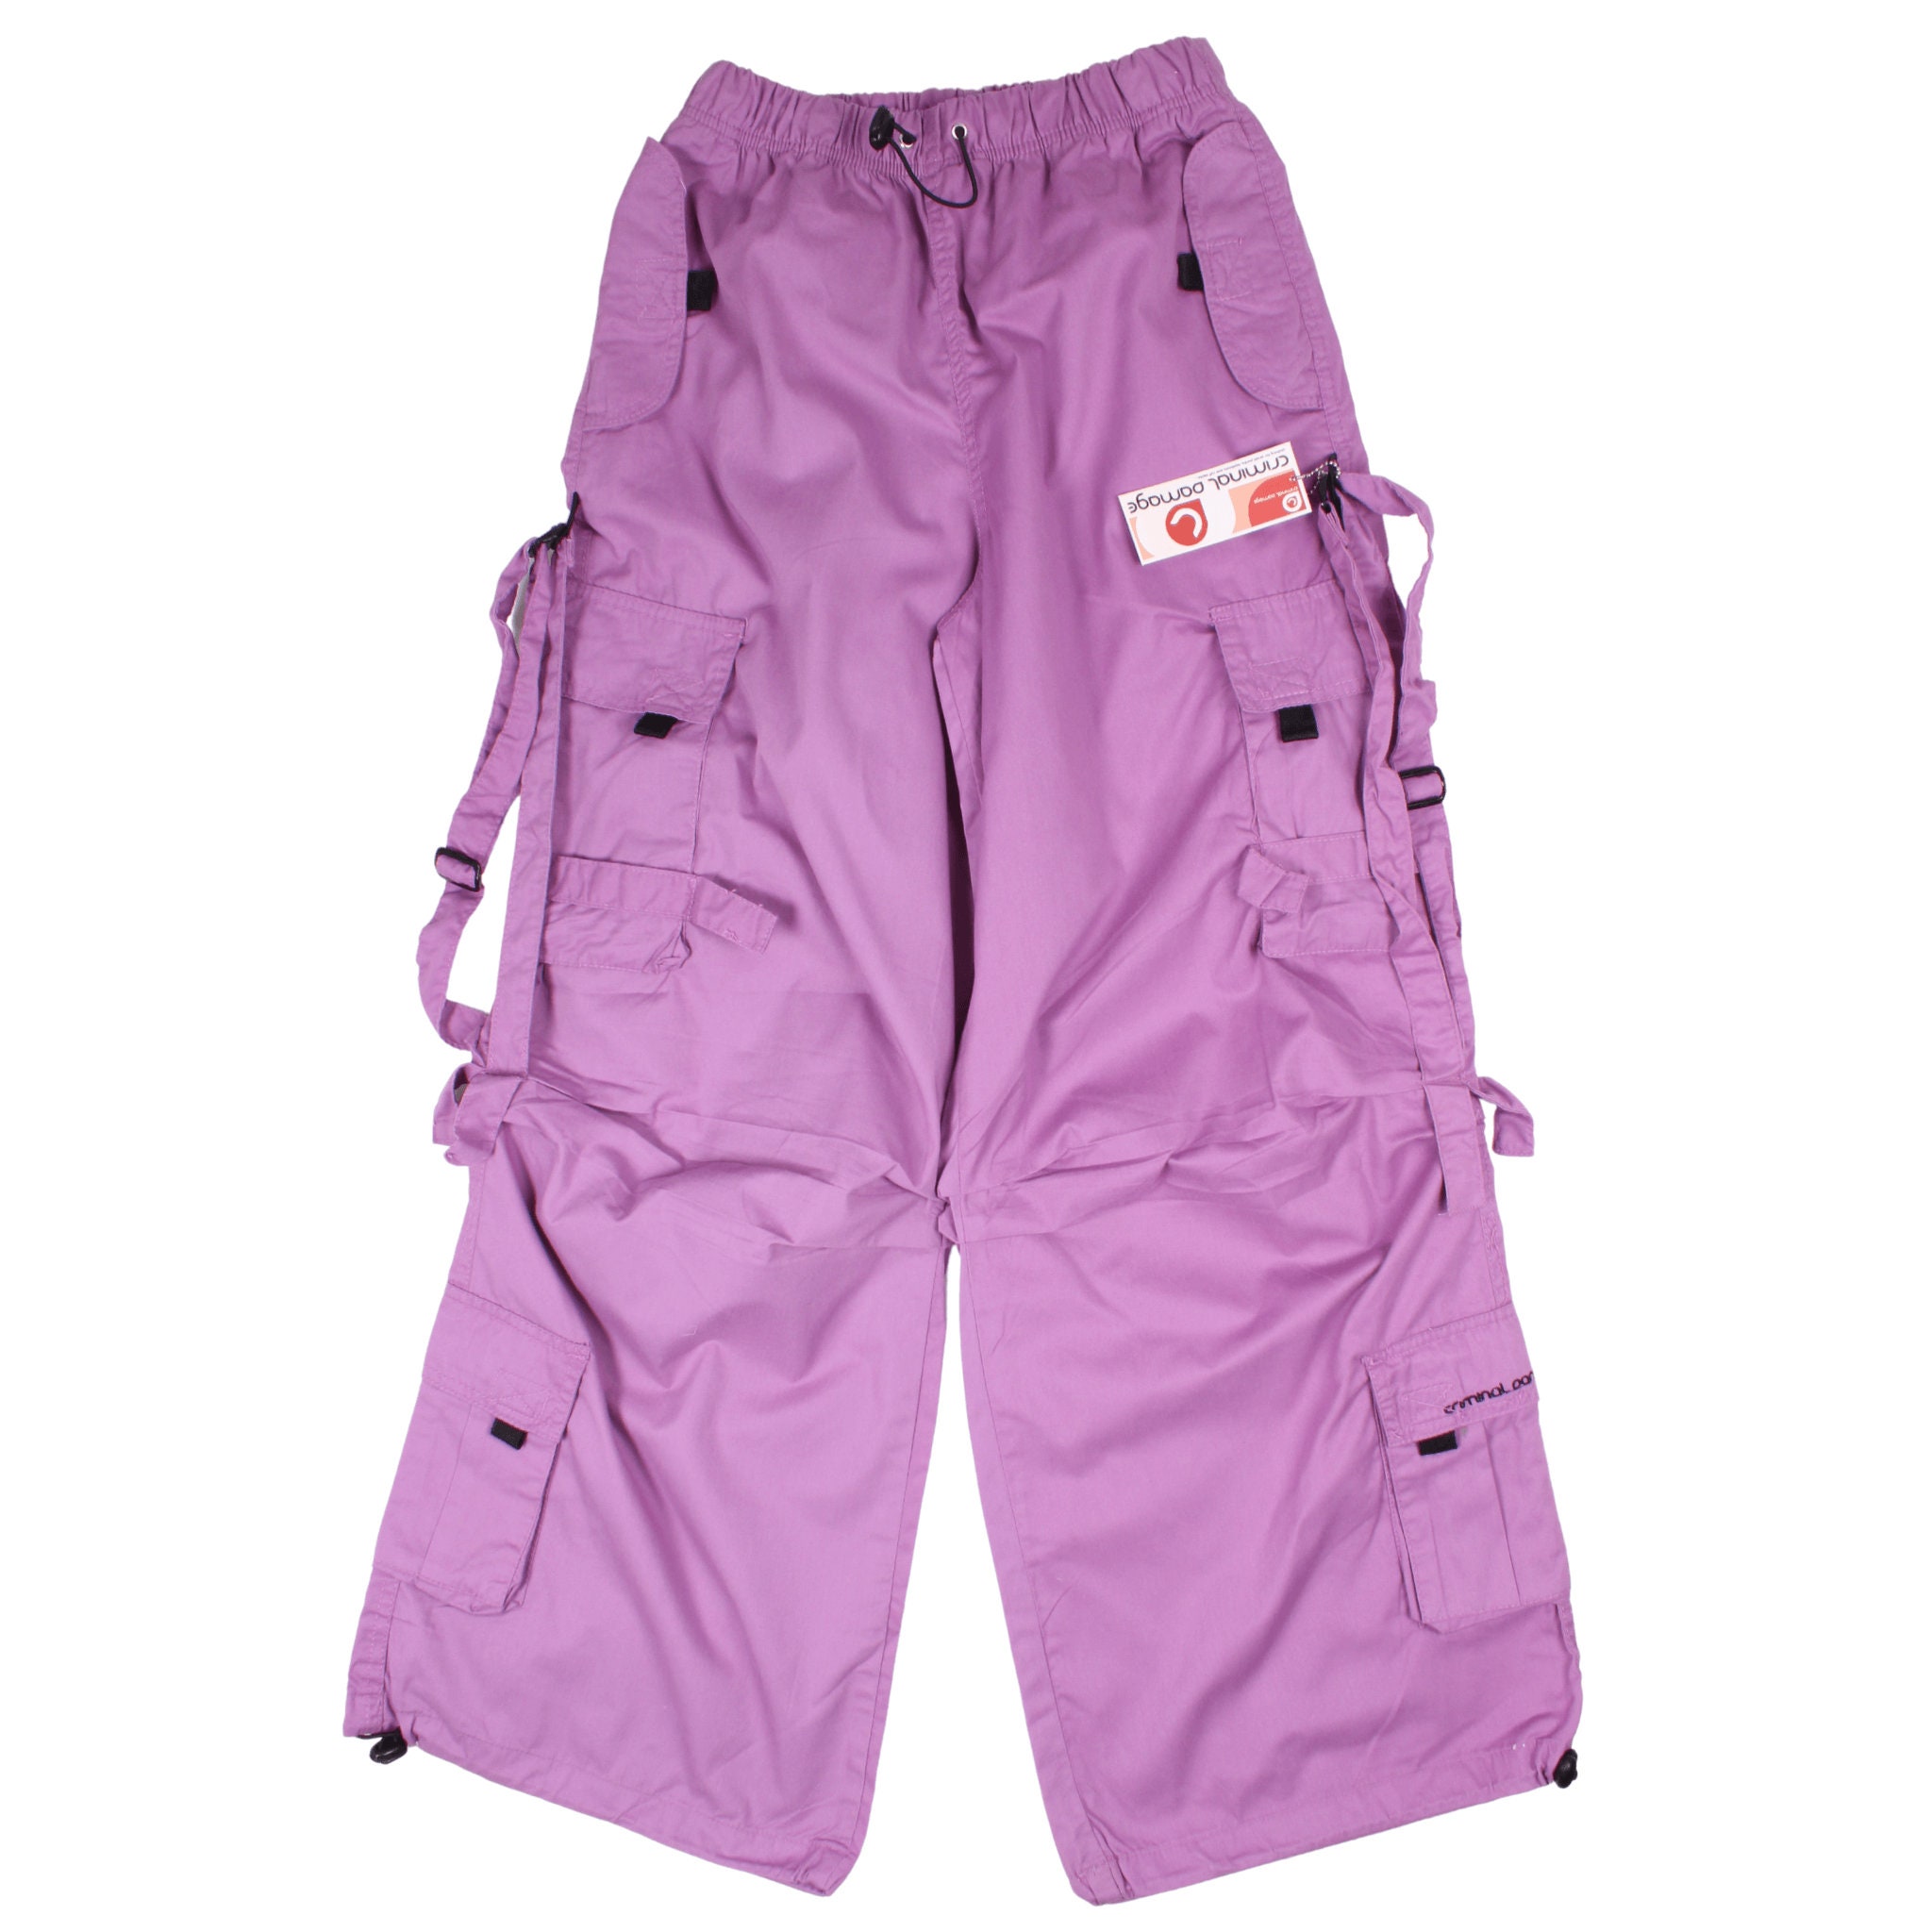 Criminal Damage oversized sweatpants in pink | ASOS